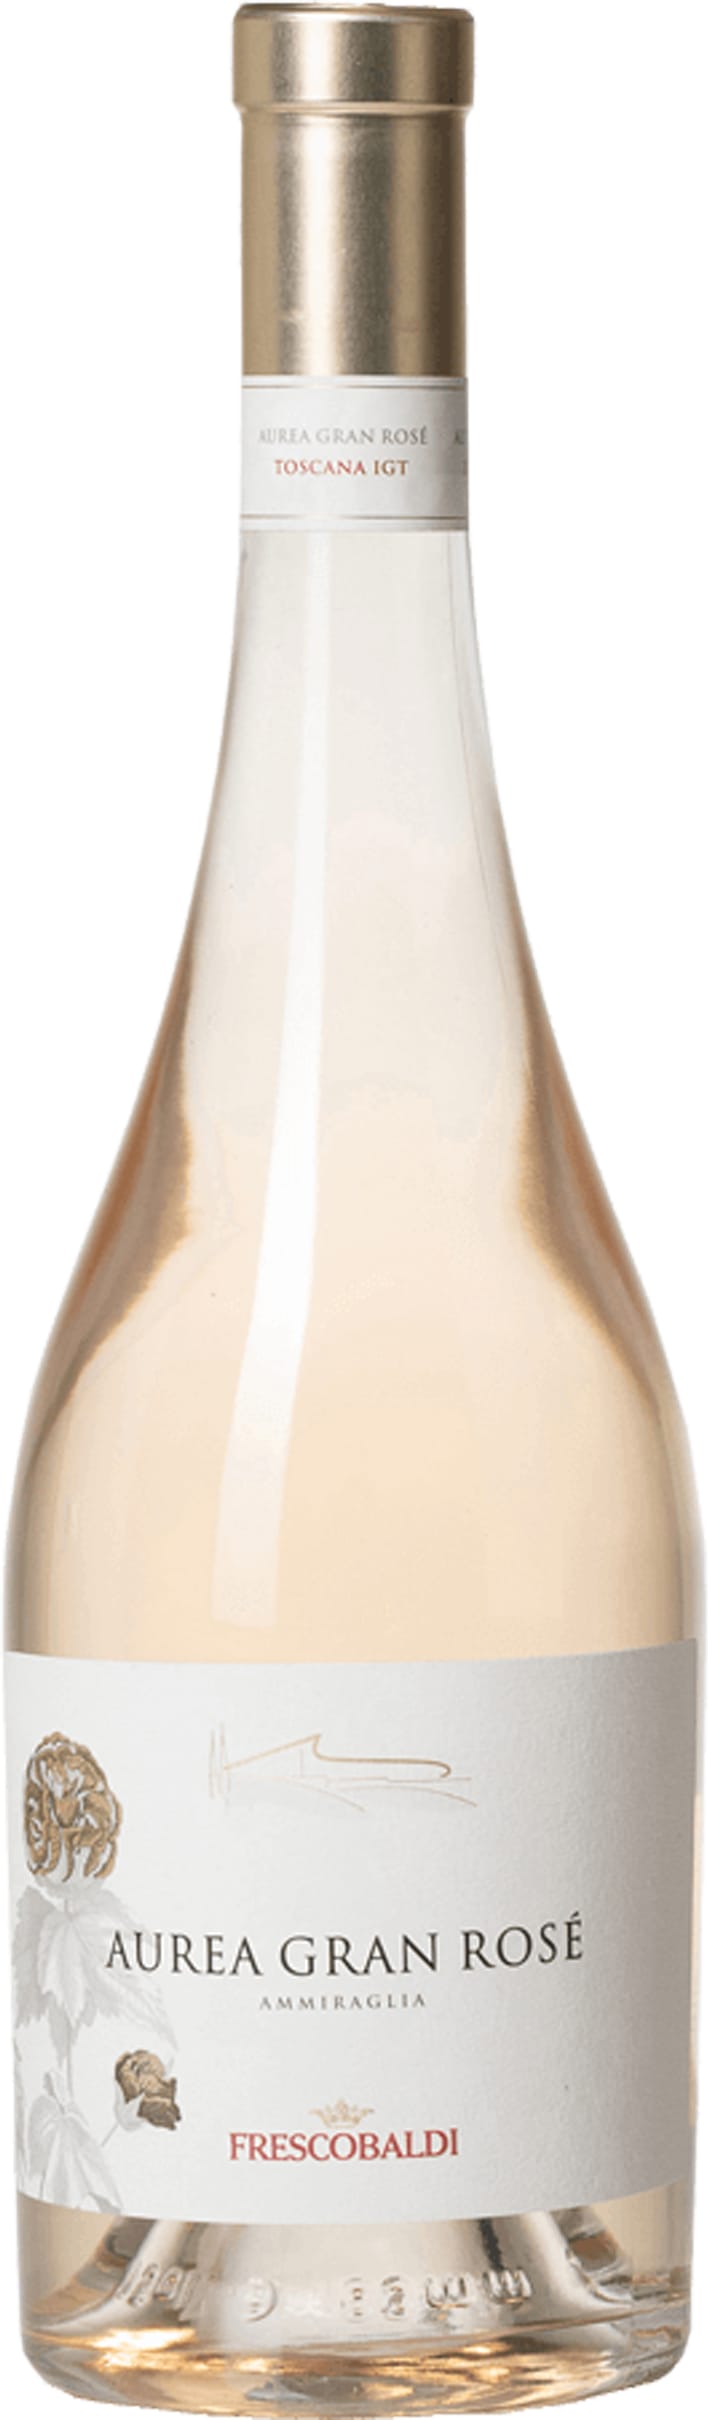 Frescobaldi Ammiraglia, Aurea Gran Rose 2020 75cl - Buy Frescobaldi Wines from GREAT WINES DIRECT wine shop